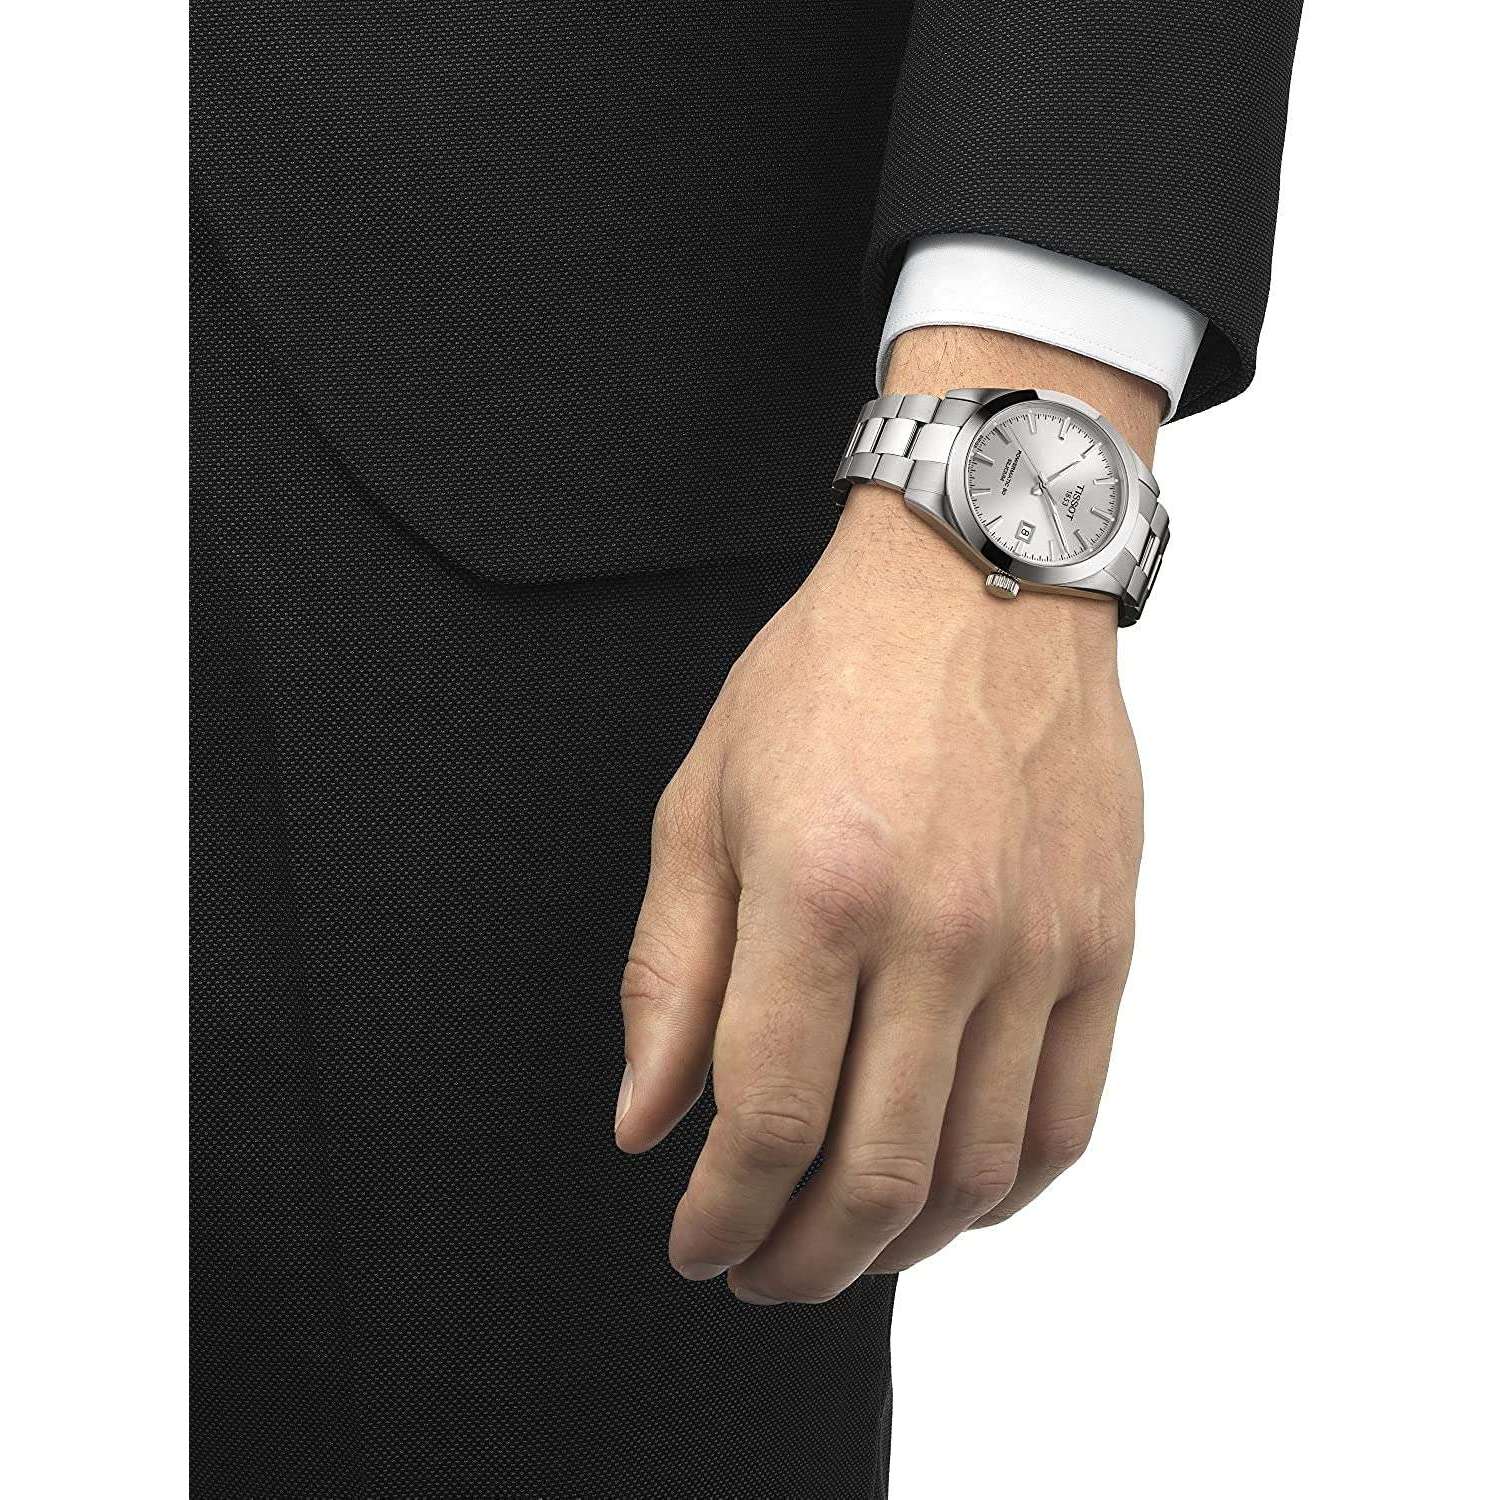 ROOK JAPAN:TISSOT GENTLEMAN POWERMATIC 80 SILICIUM 40 MM MEN WATCH T1274071103100,Luxury Watch,Tissot Gentleman